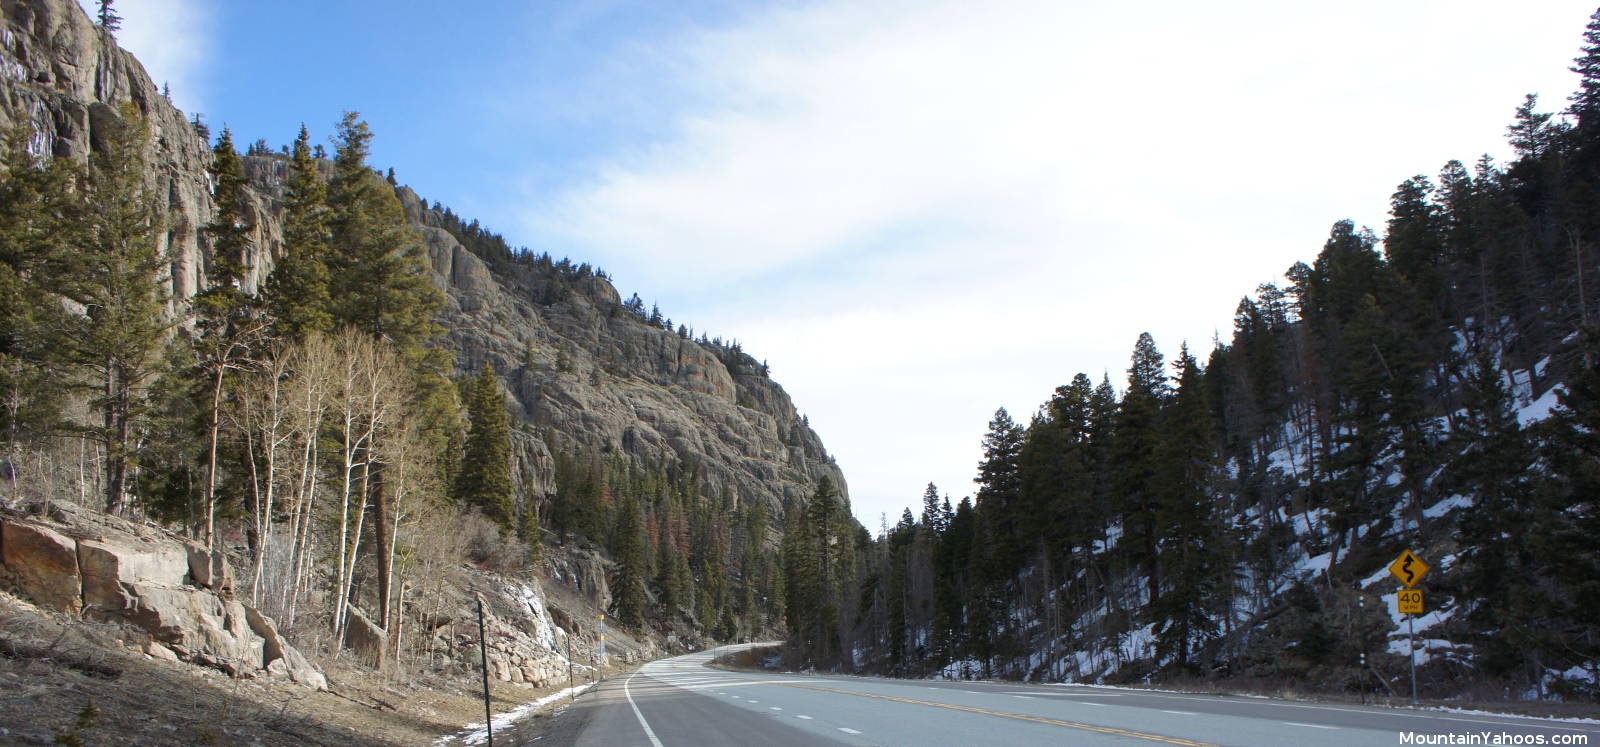 Highway 160 on the way to Wolf Creek ski reosrt